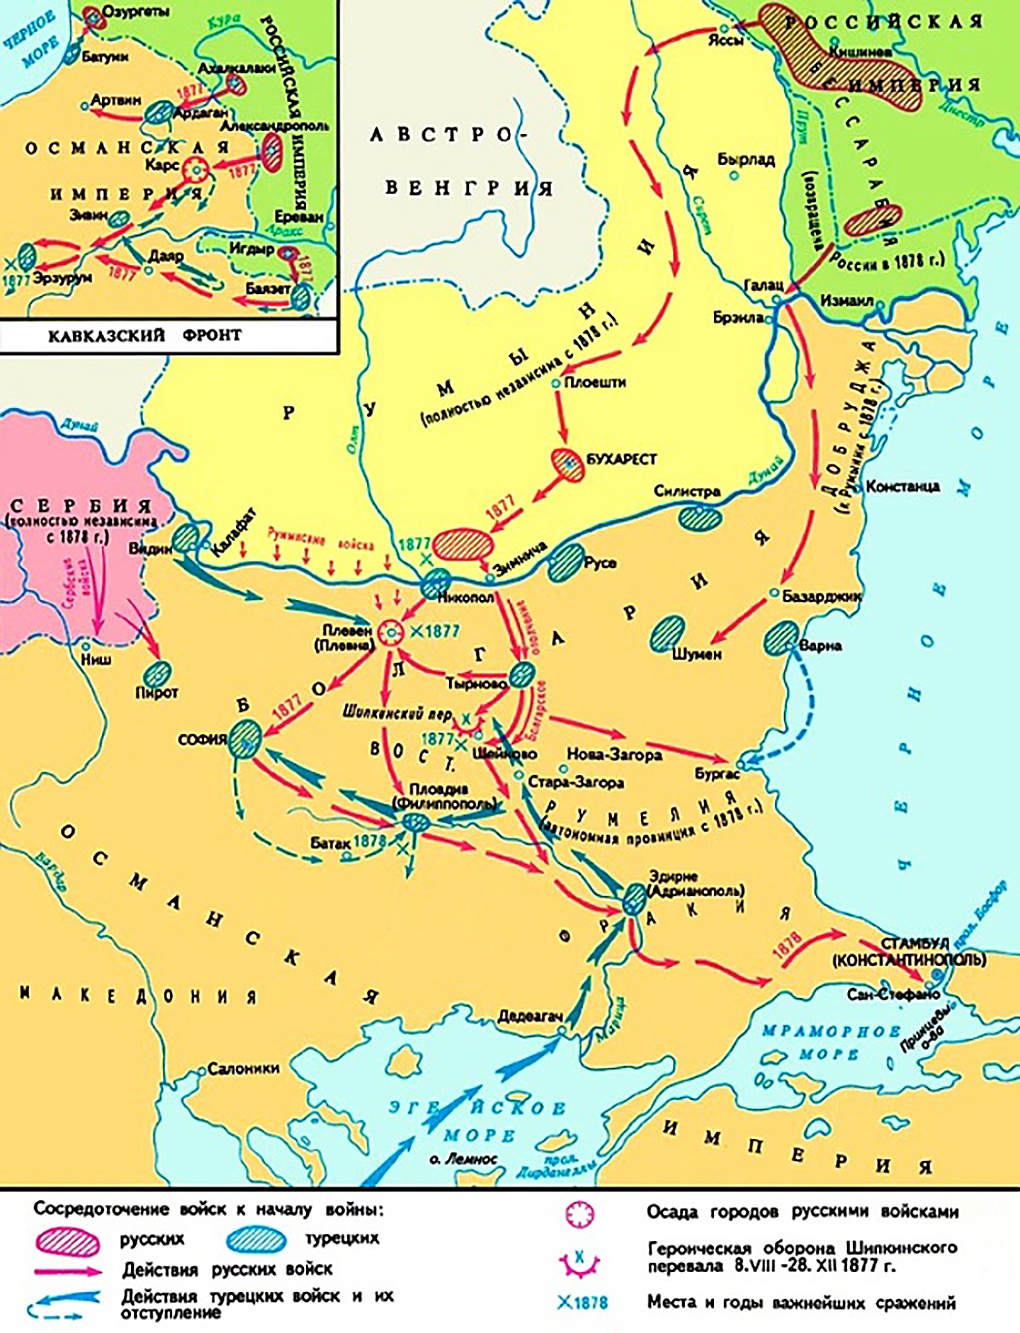 Карта театра боевых действий.